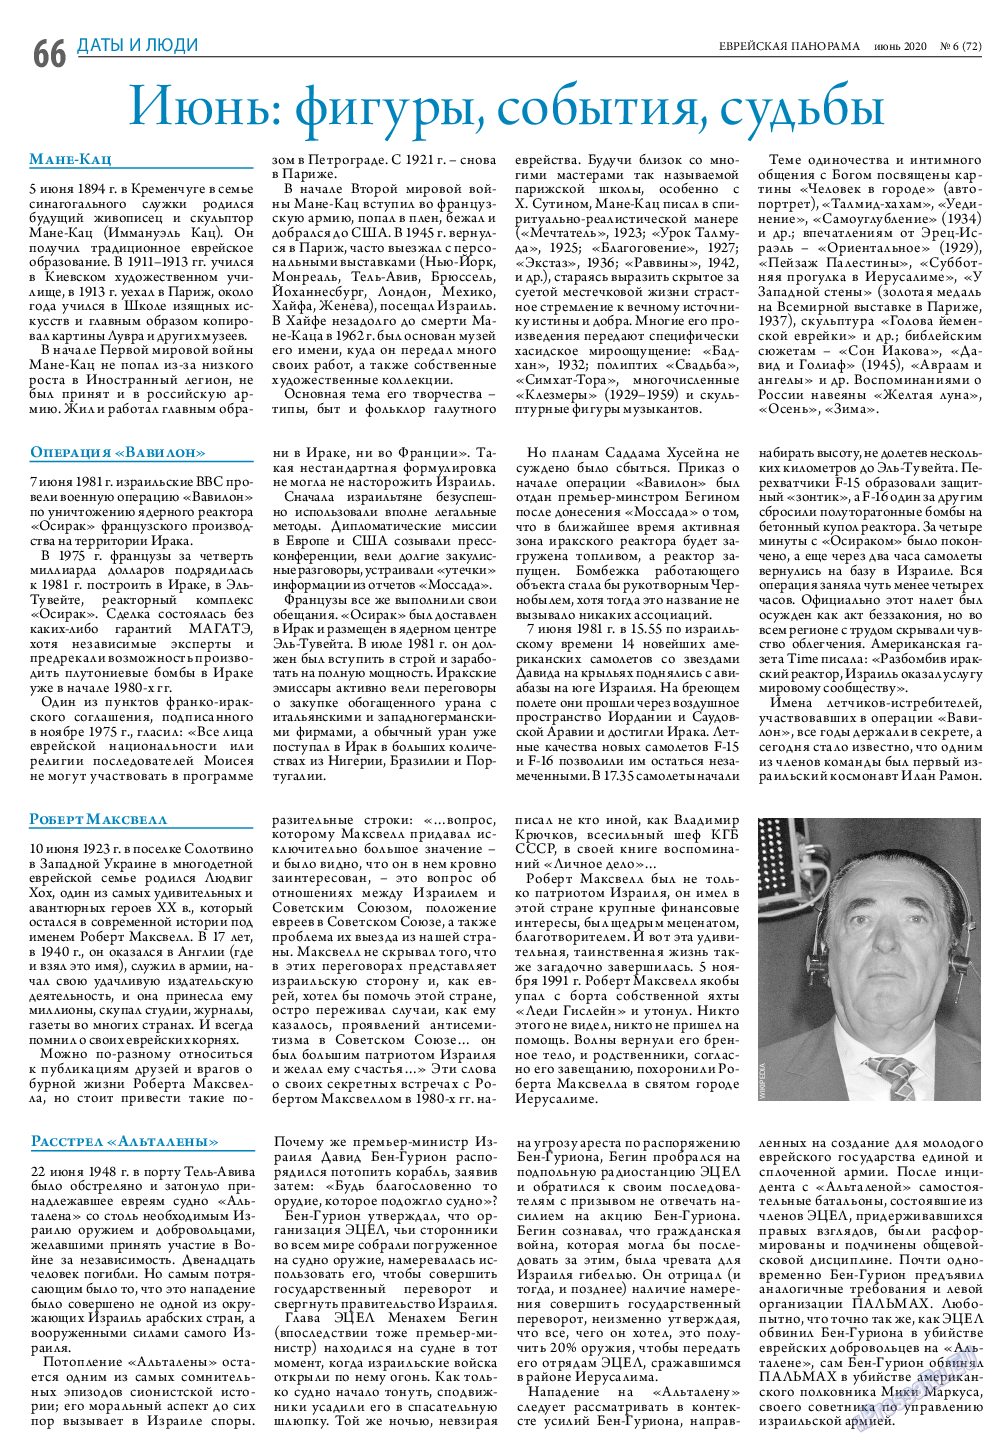 Еврейская панорама, газета. 2020 №6 стр.66